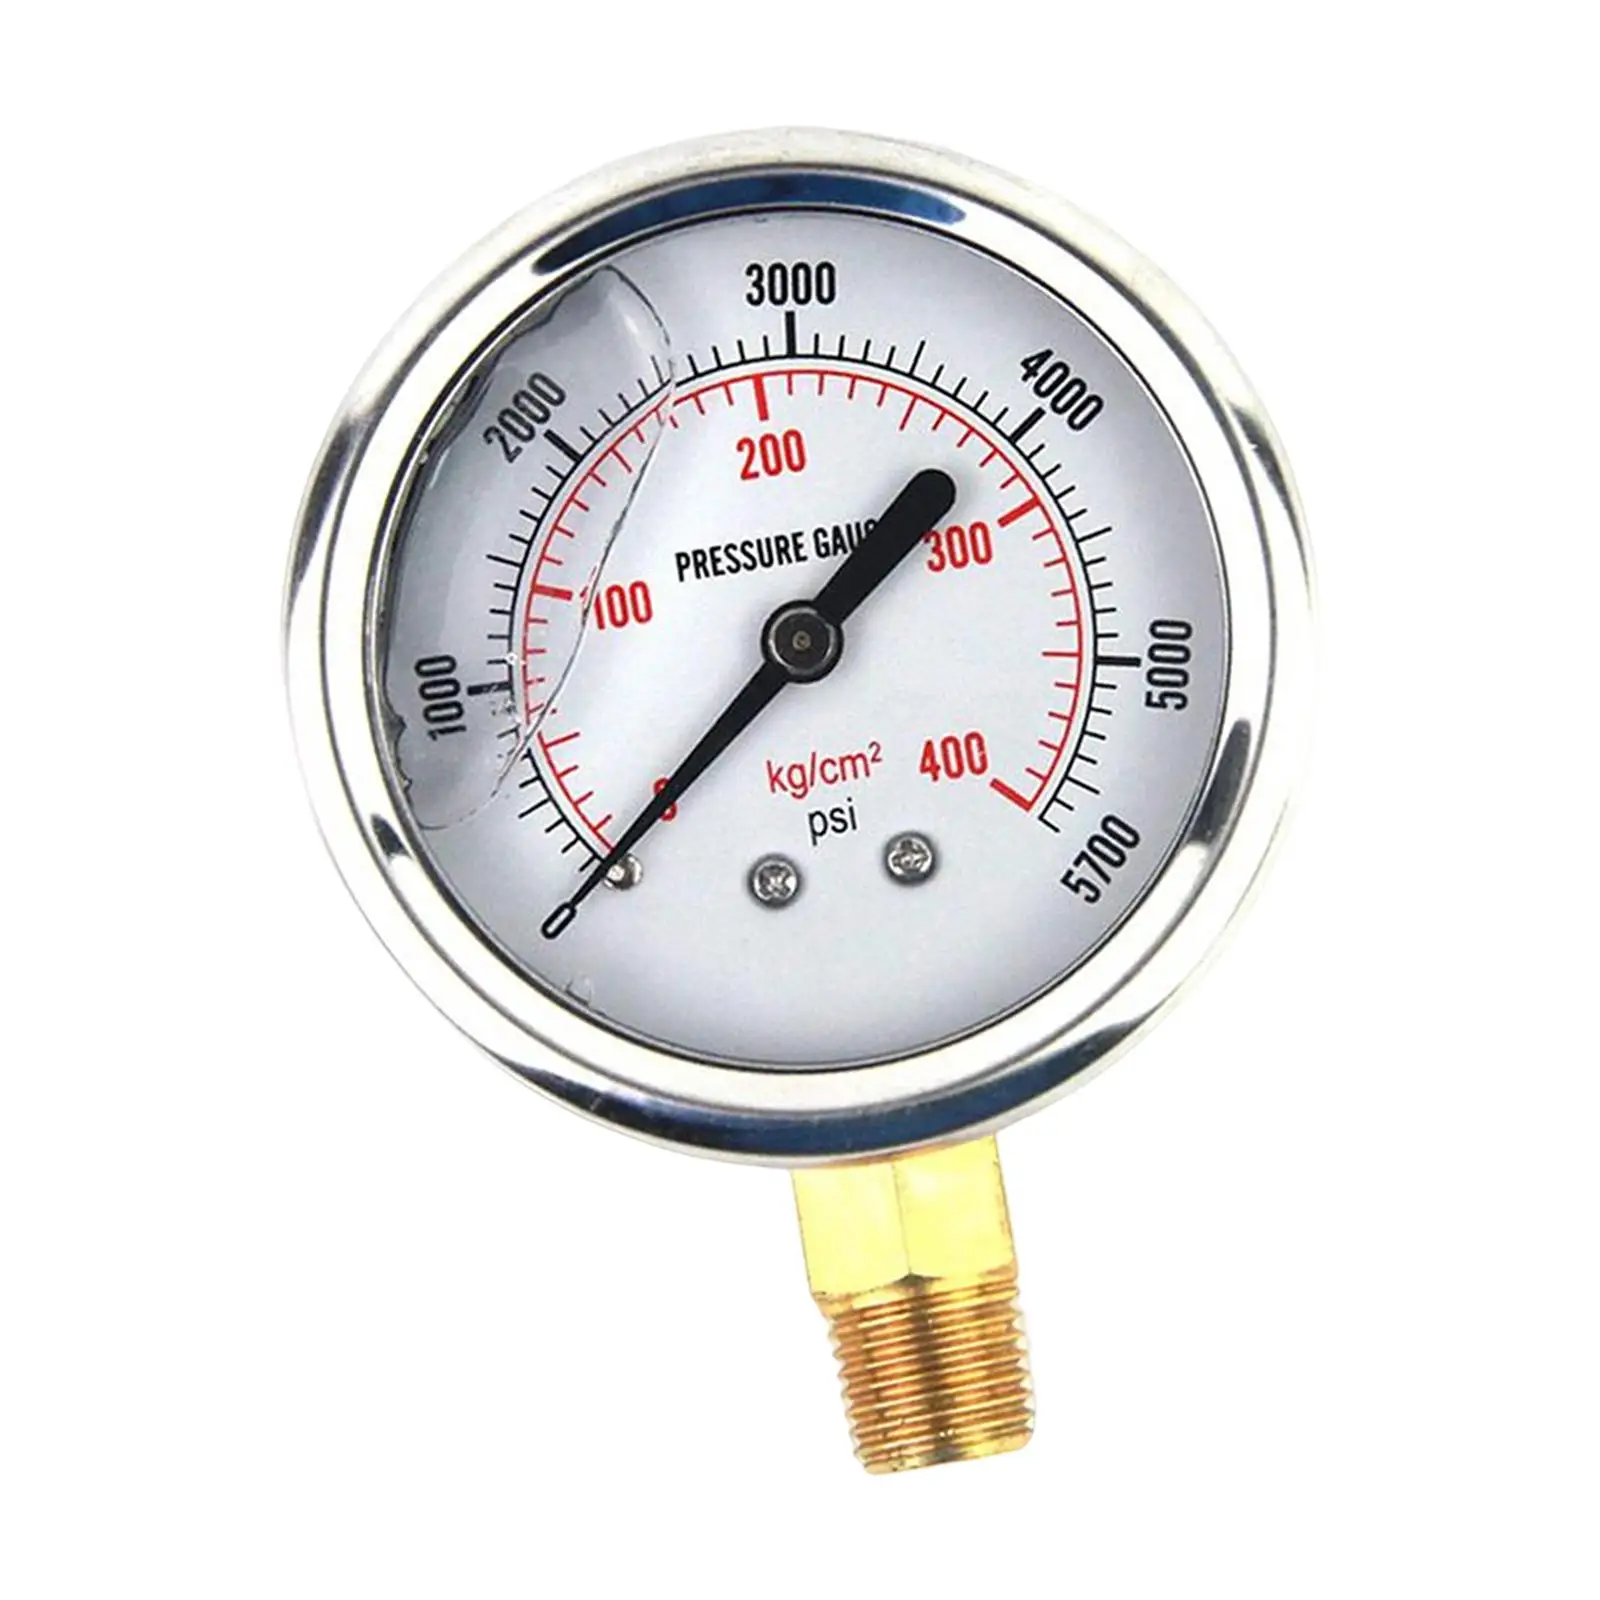 Professional Hydraulic Pressure Gauge Automotive Water Pressure 1/4in NPT Lower Mount US Standard Thread Liquid Filled Universal